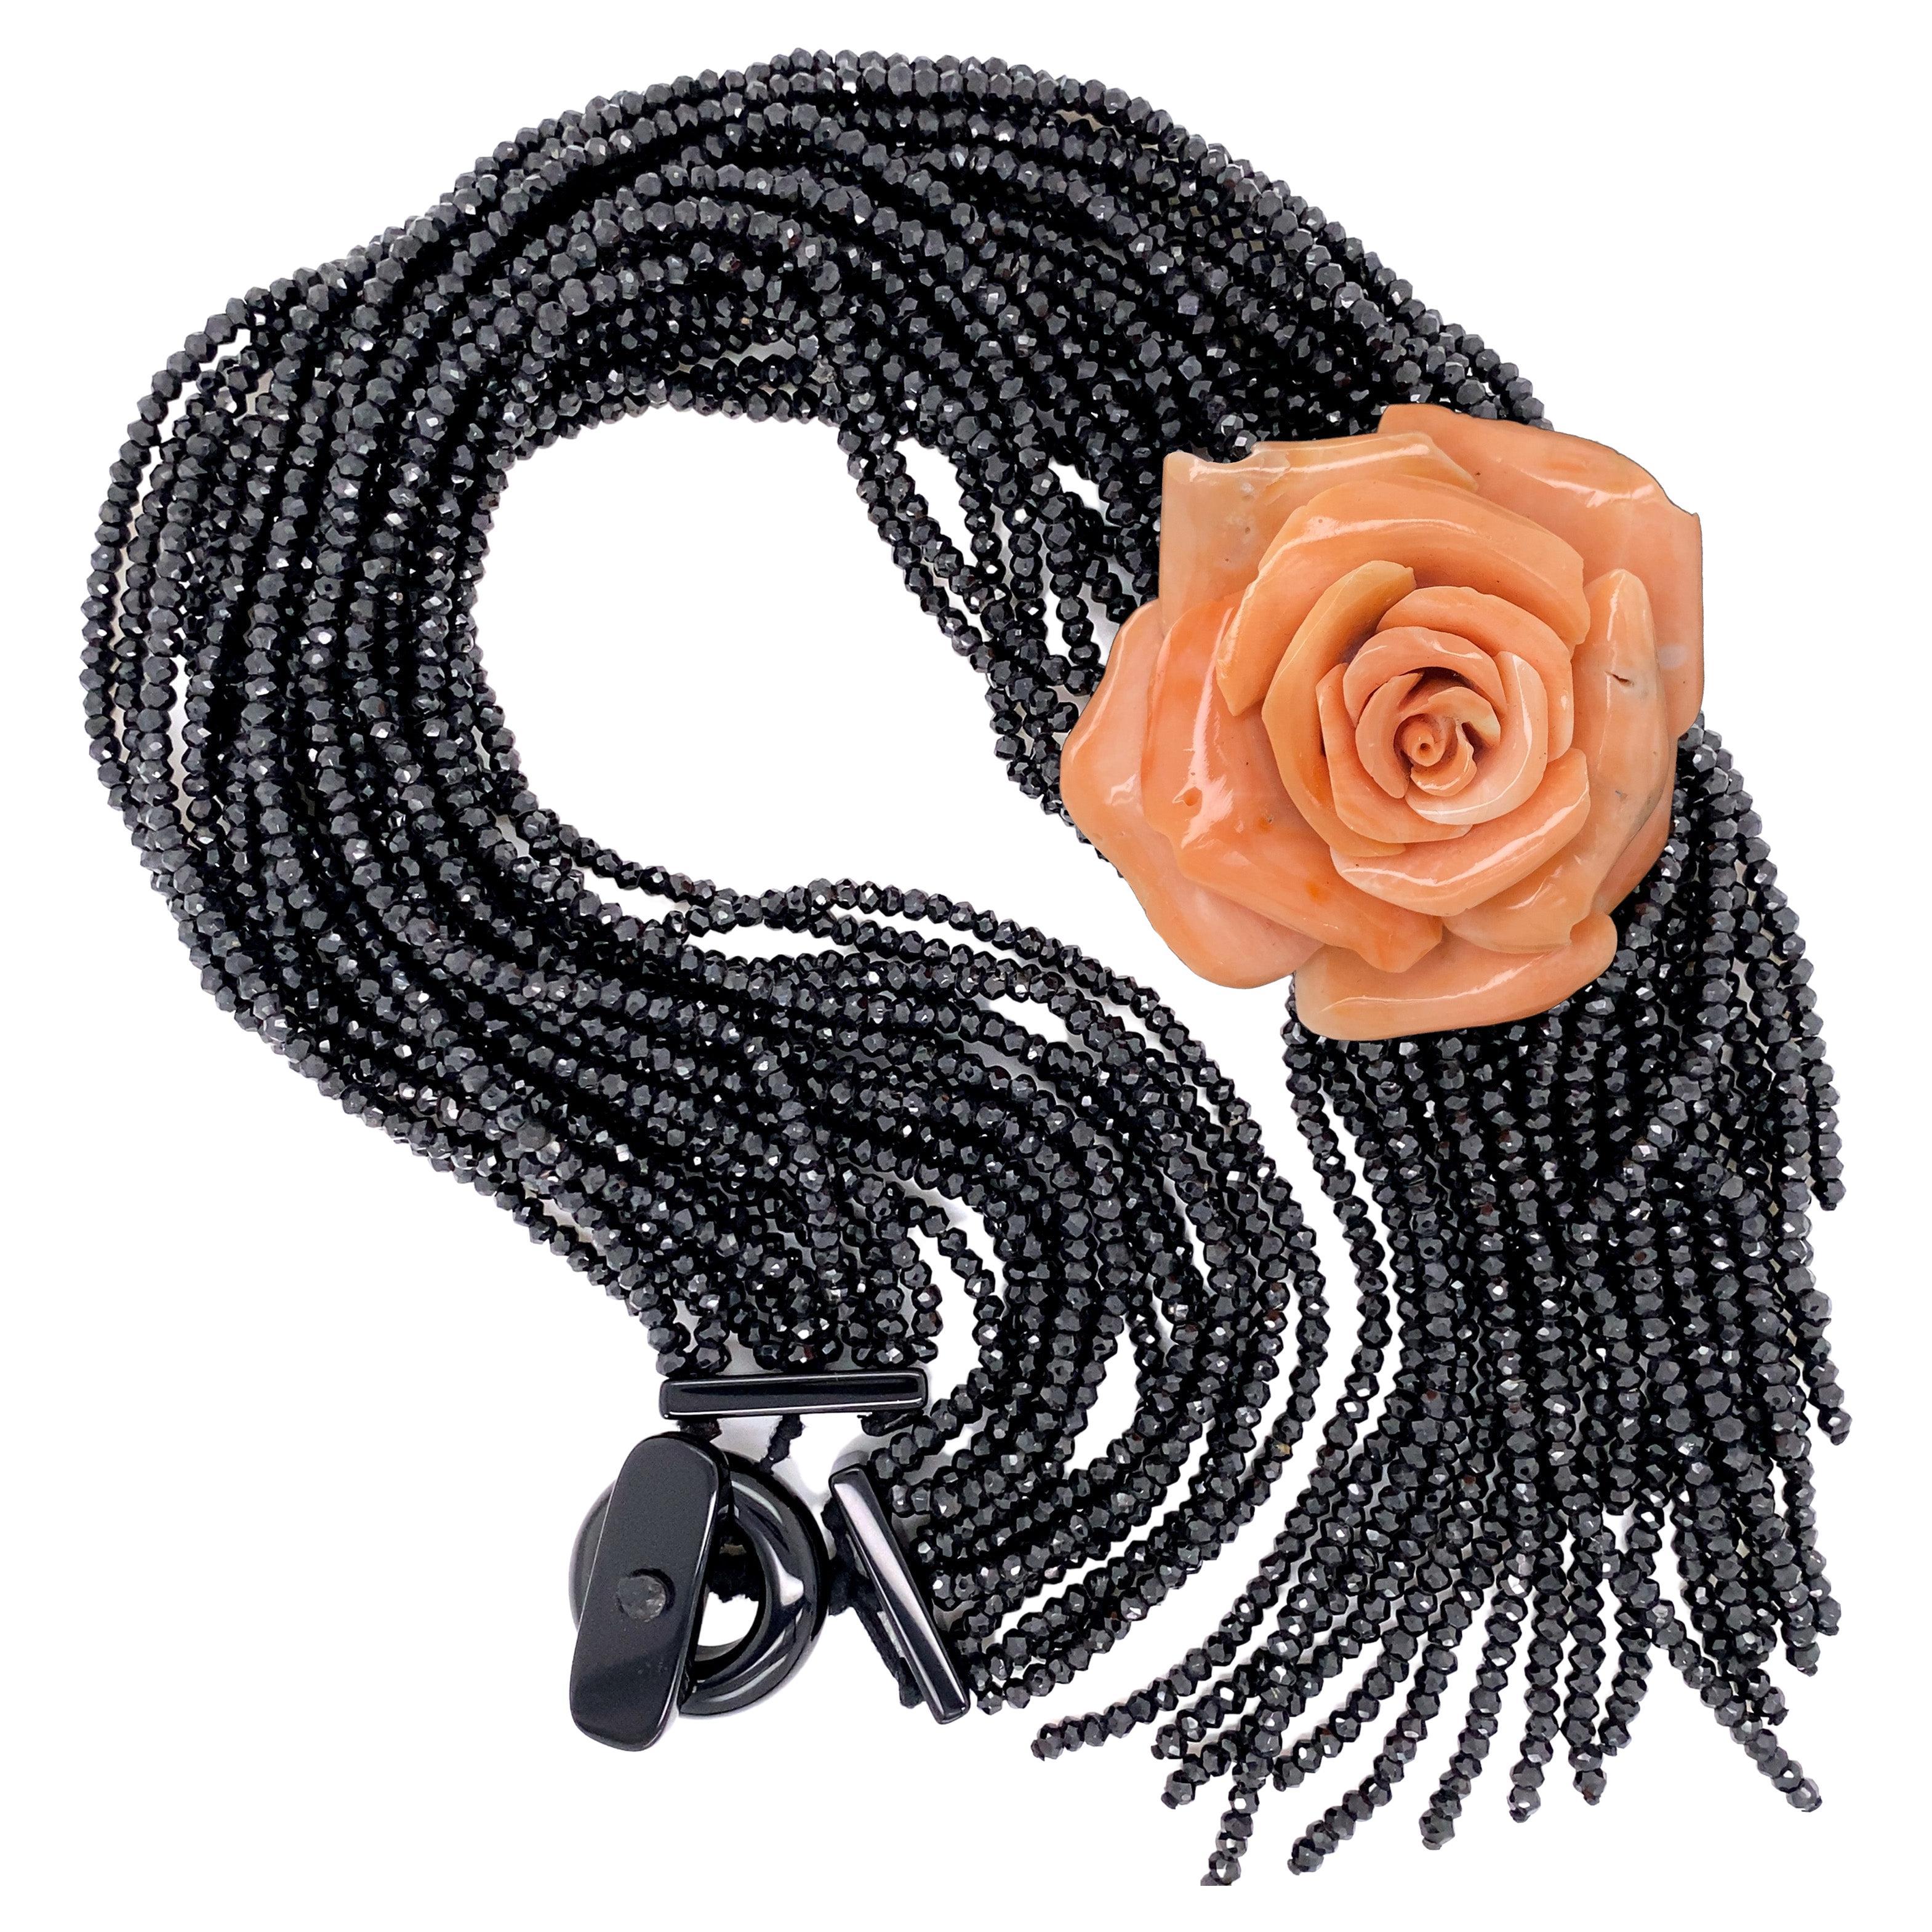 Designer Rosita Petrosino Carved Coral Rose Multi Strand Spinel Bead Necklace For Sale